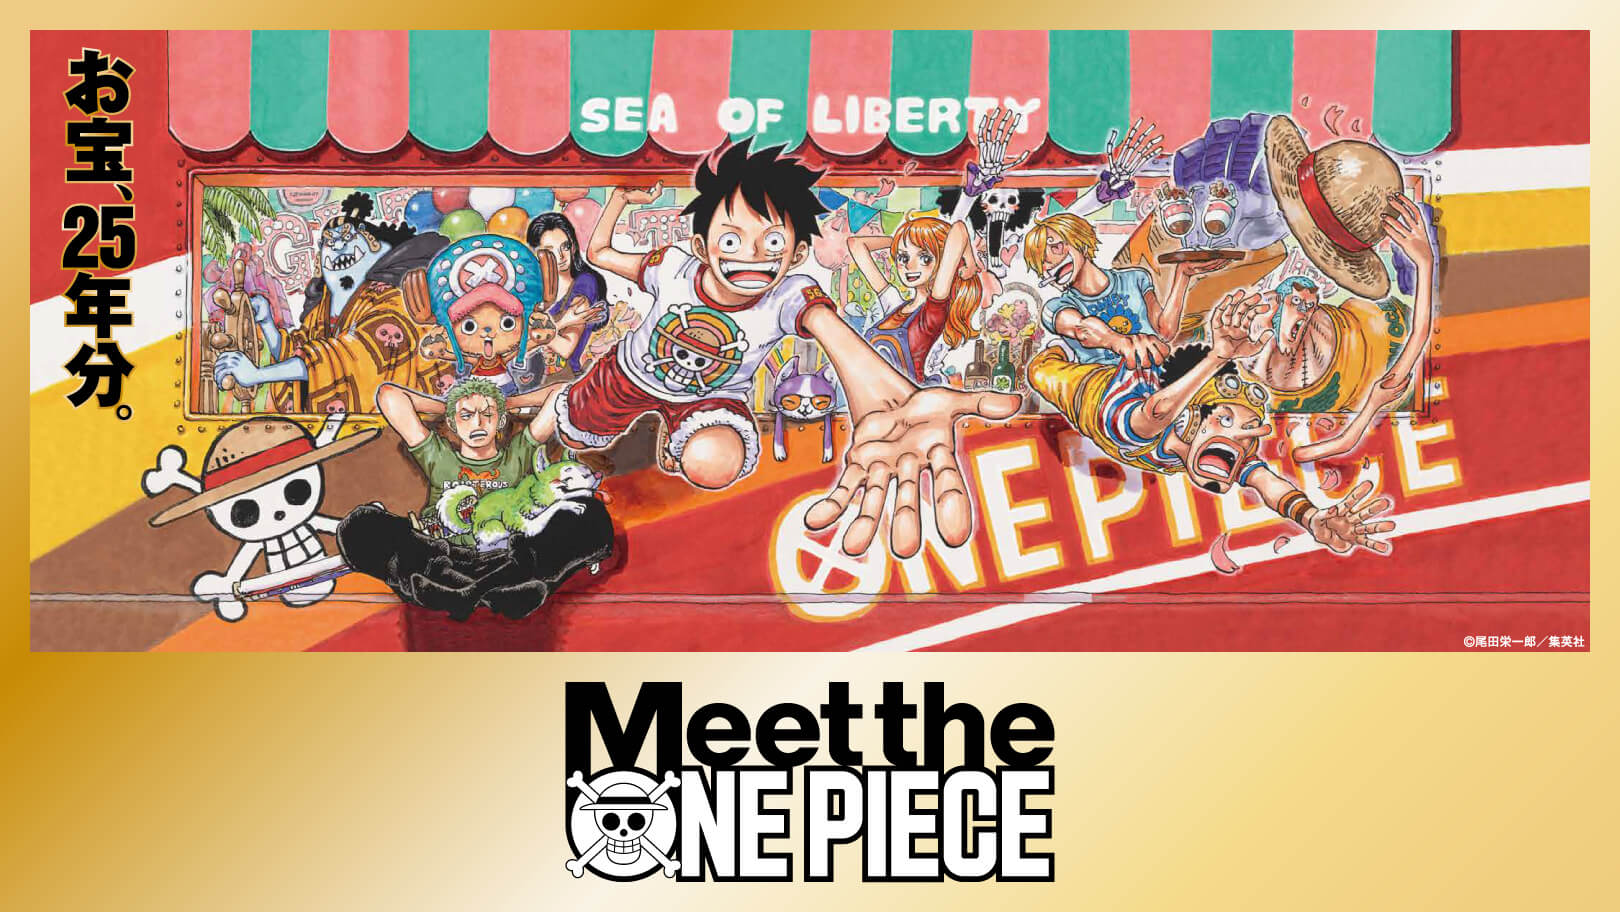 One Piece - Nami Prize Figure (It's a Banquet!! Ver